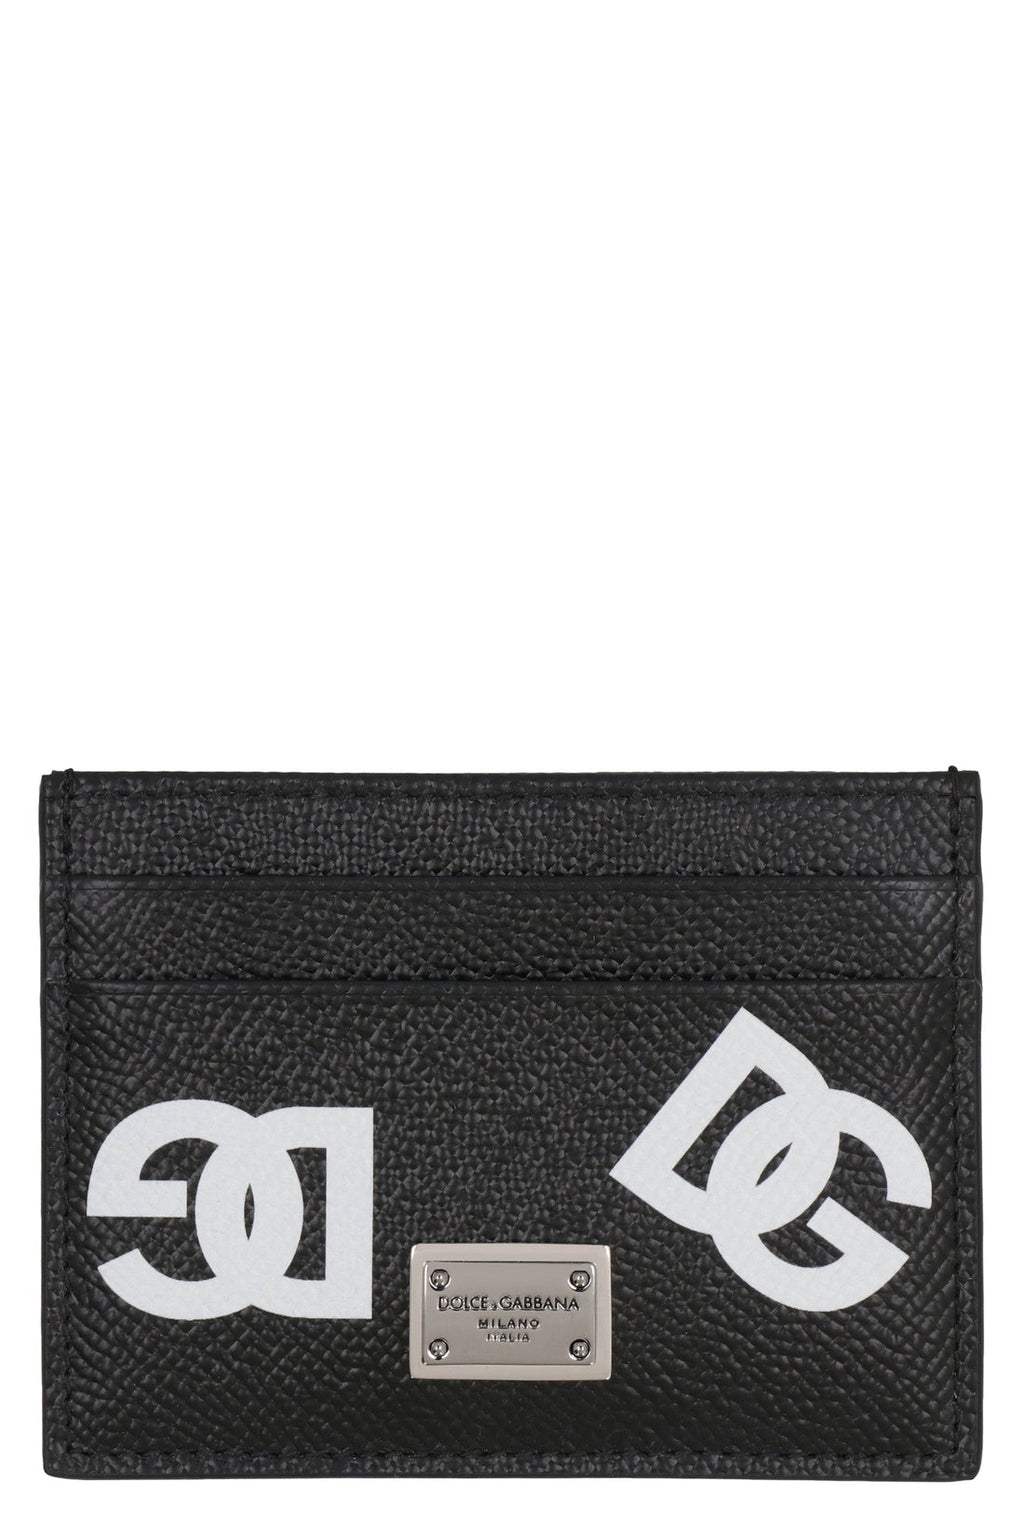 Dolce & Gabbana-OUTLET-SALE-Printed leather card holder-ARCHIVIST